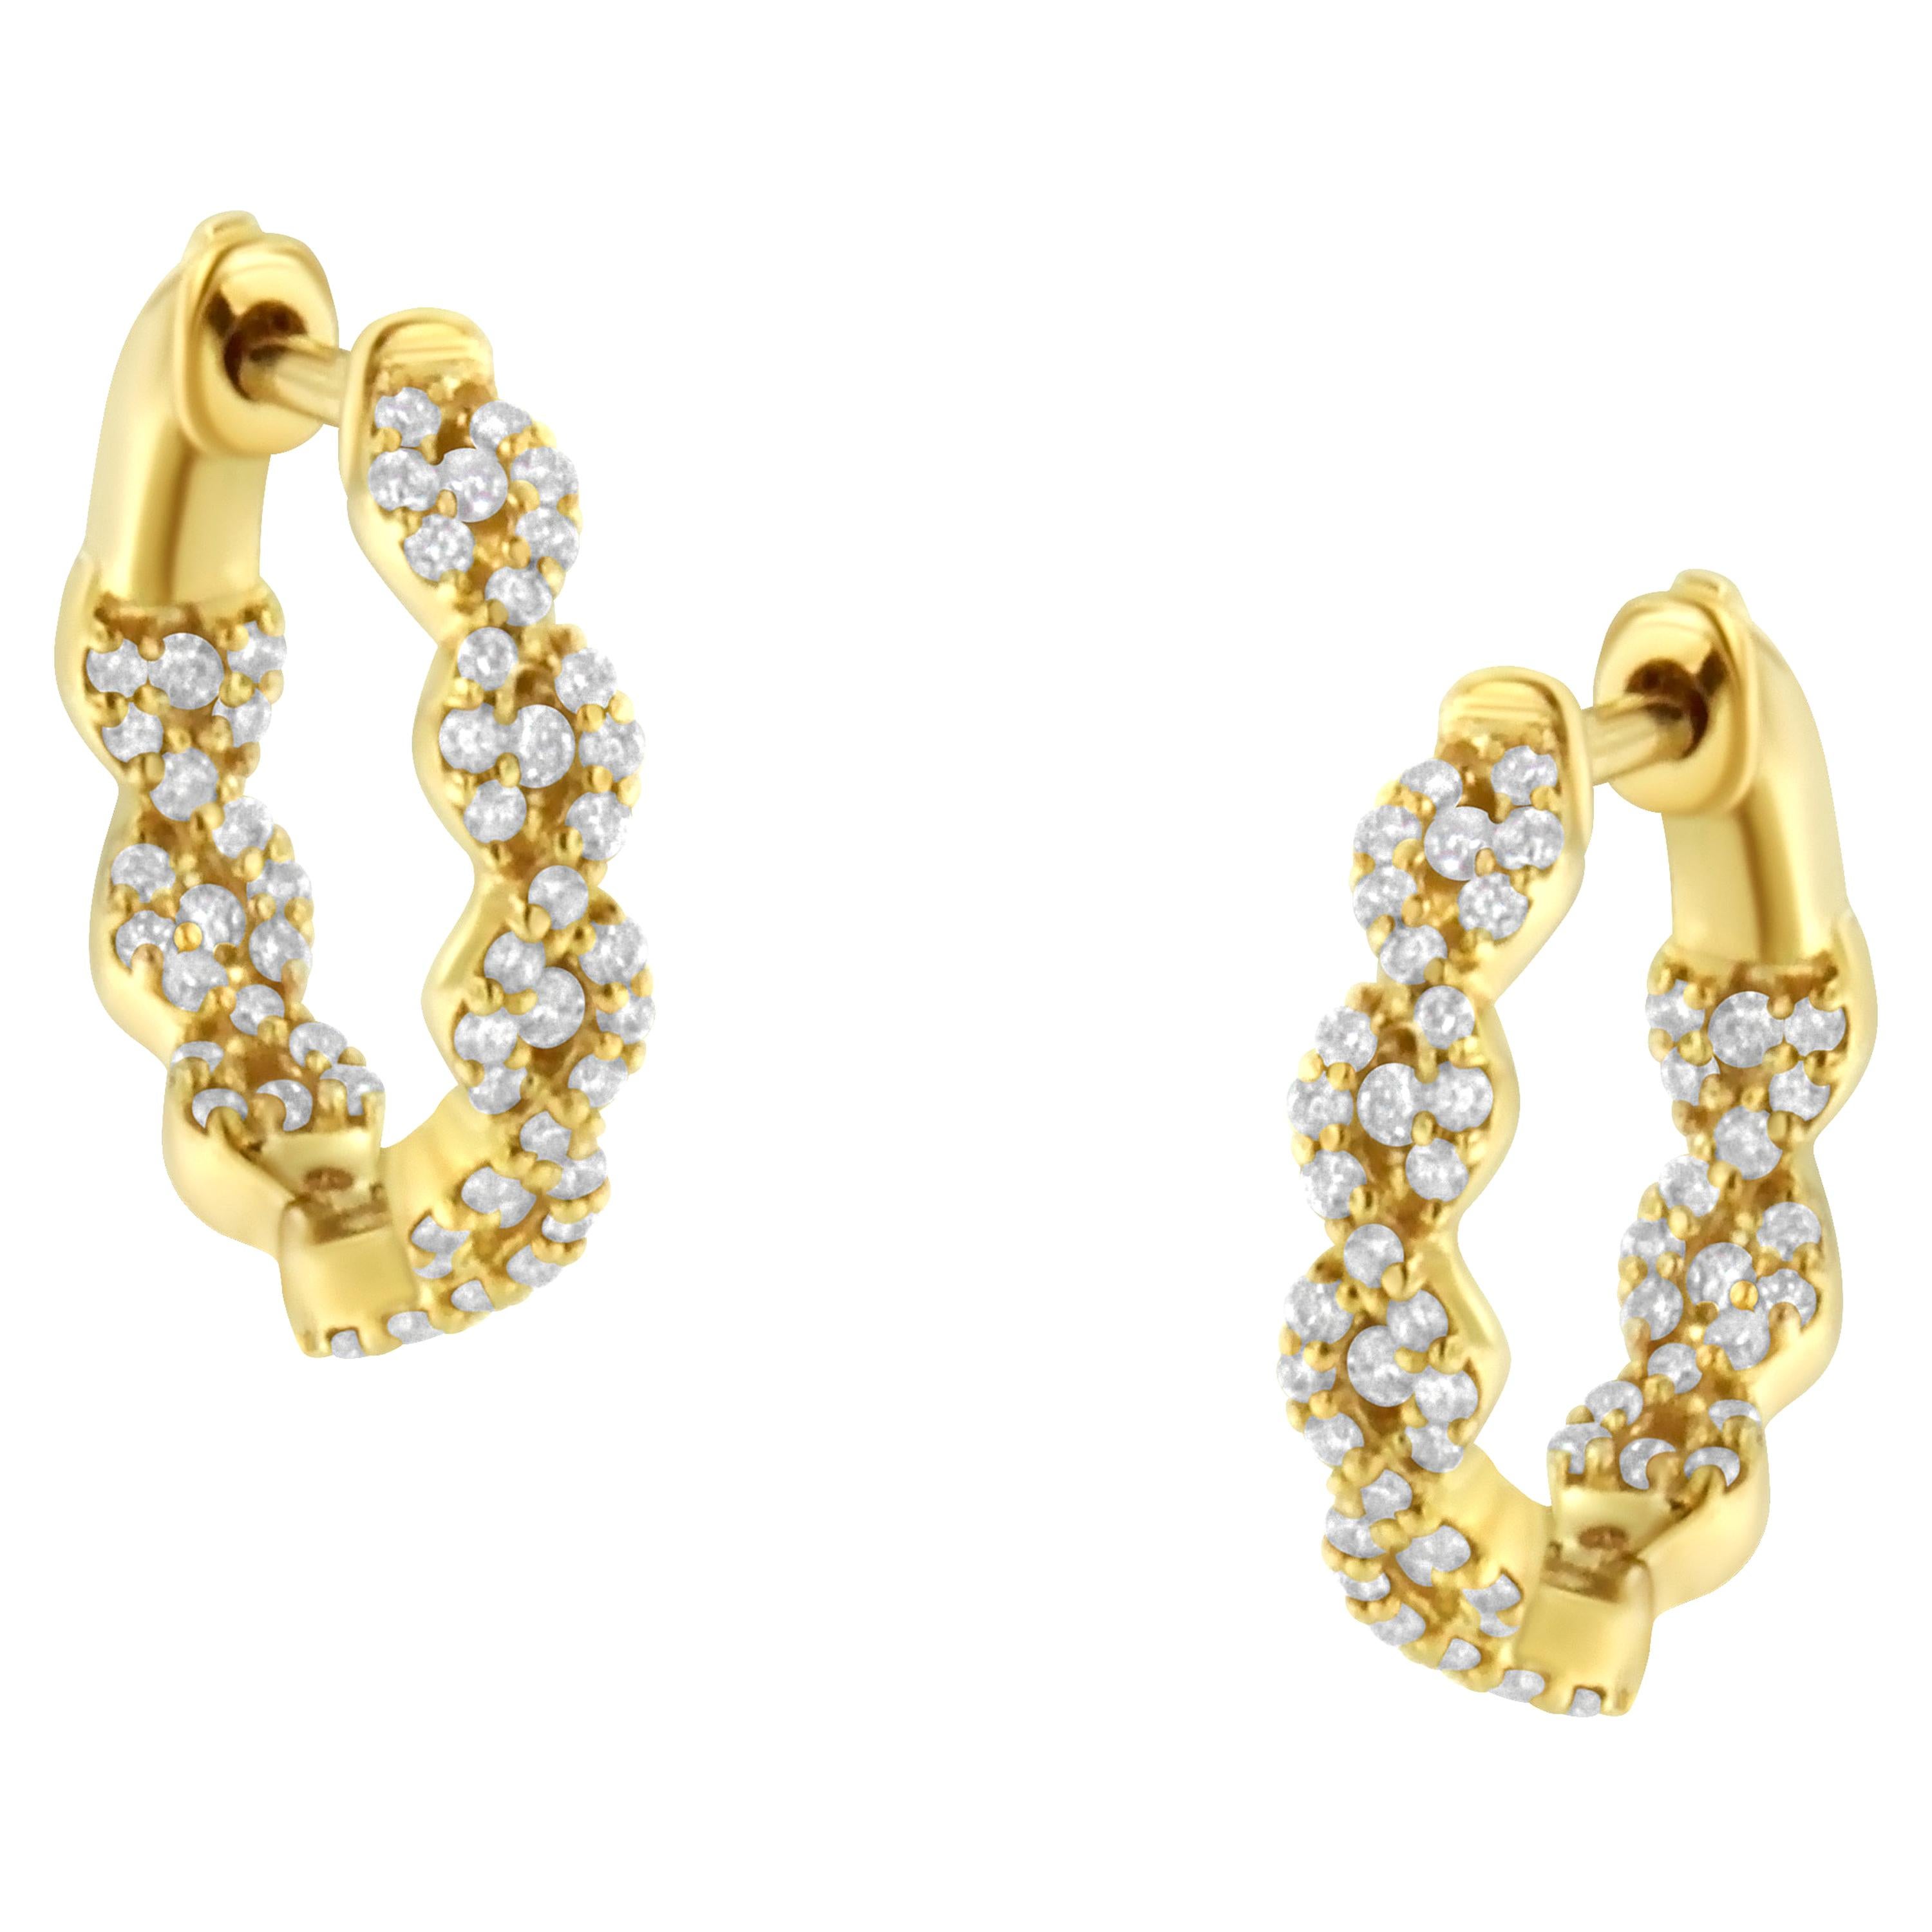 10K Yellow Gold 1/2 Carat Diamond Huggy Earrings